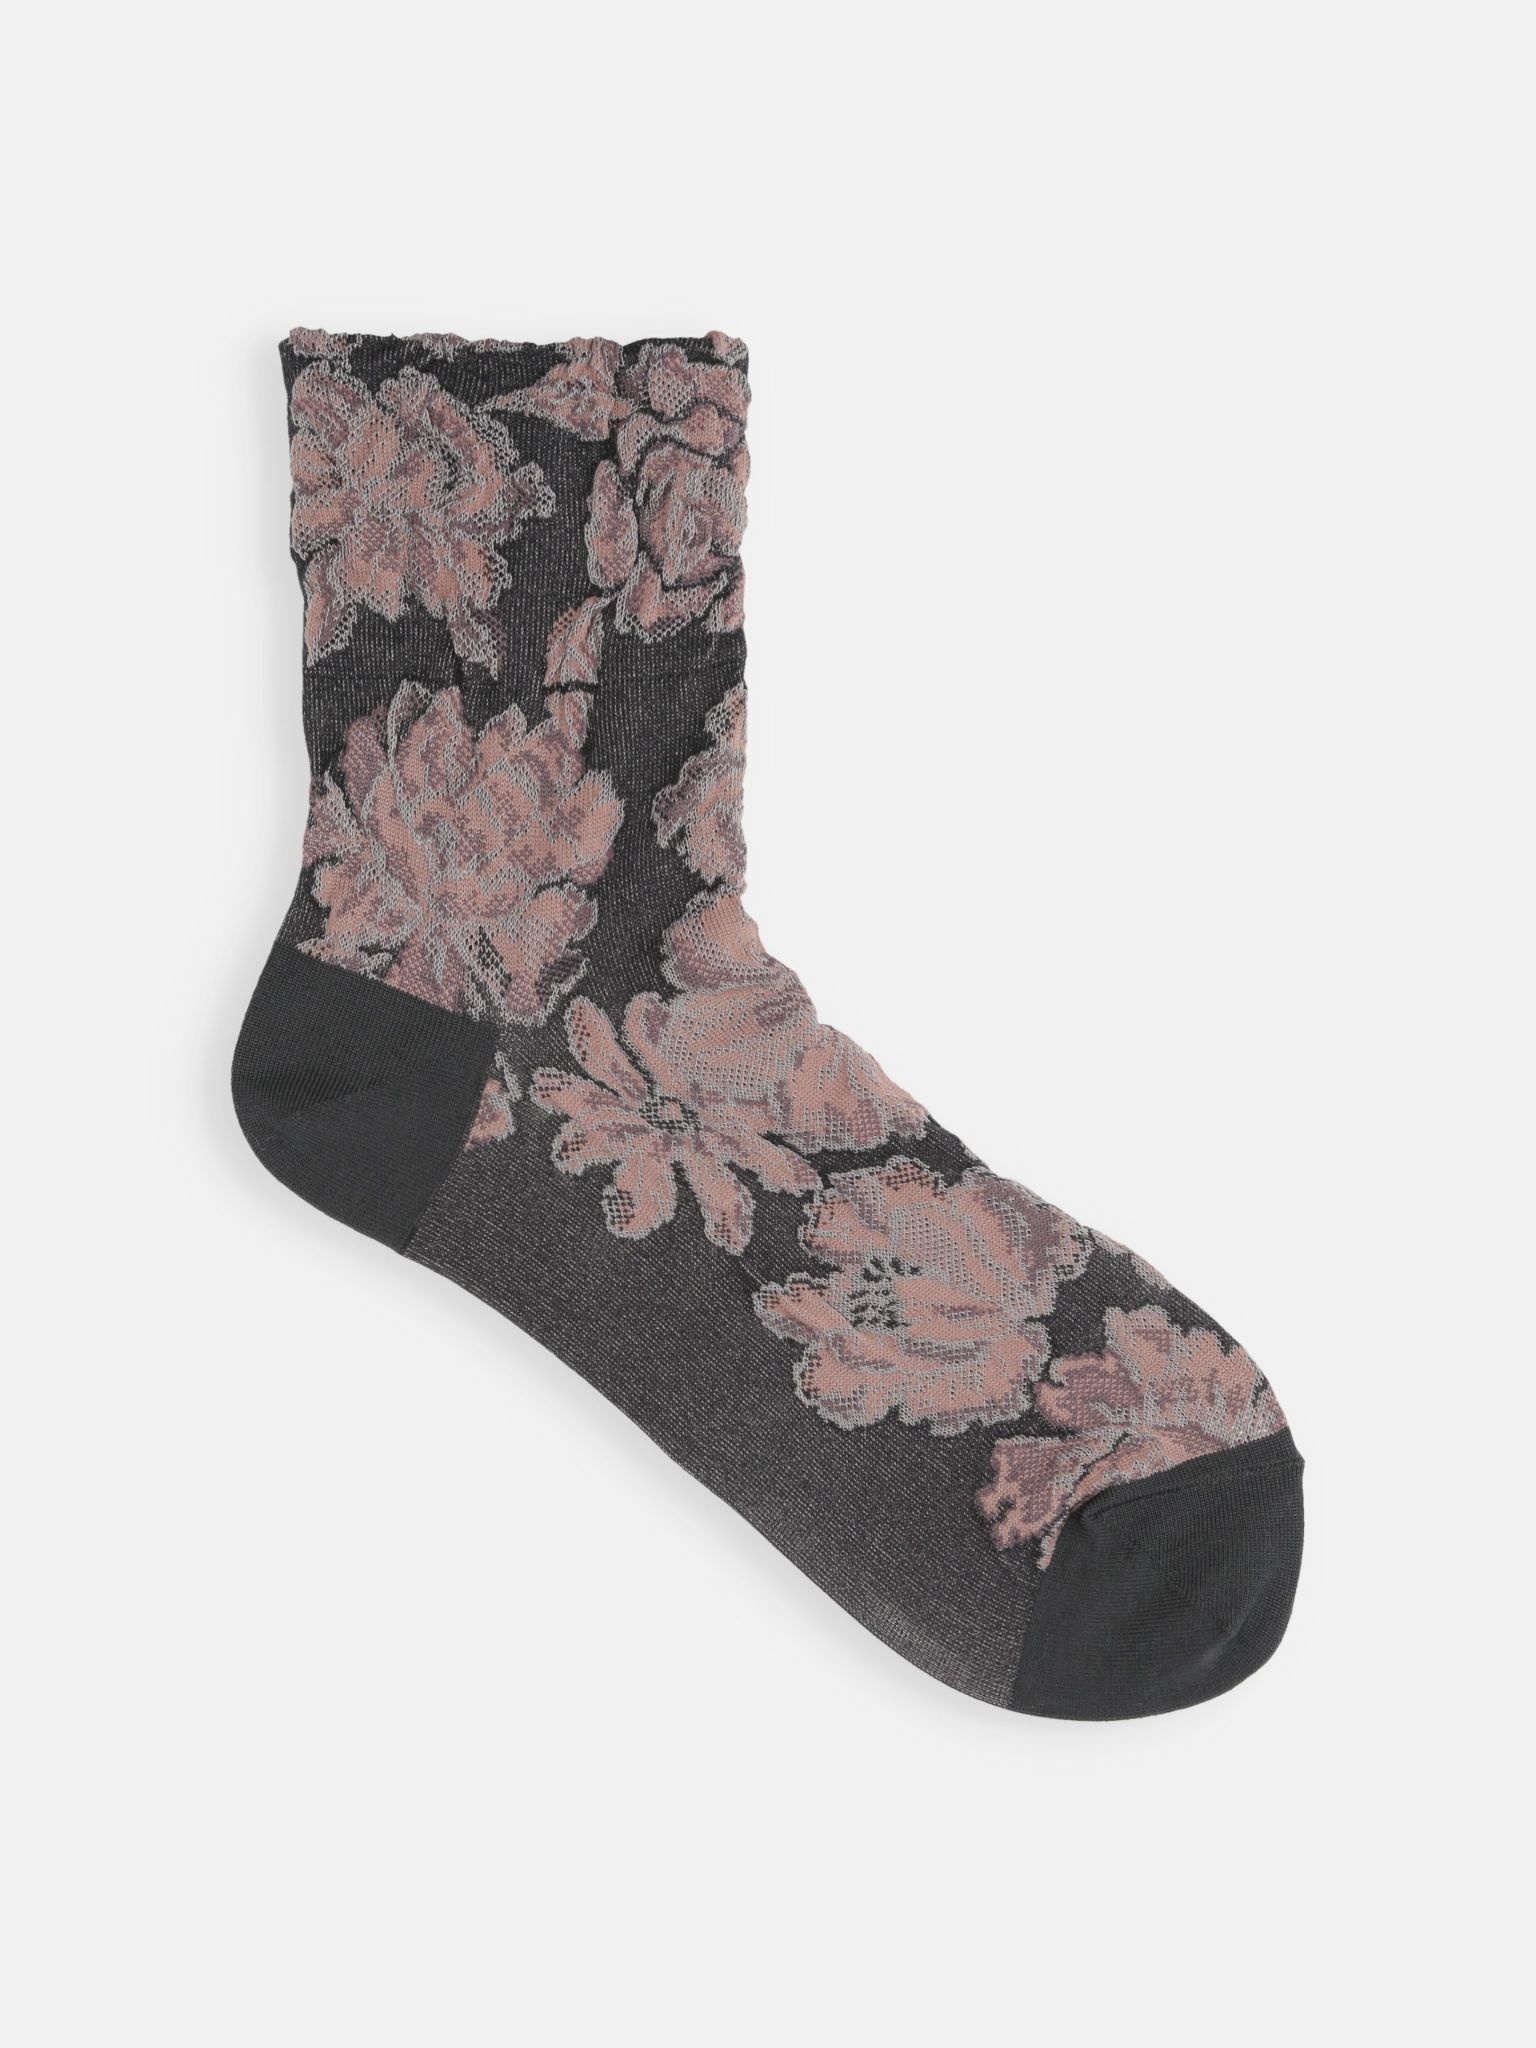 Viola Flowers On Black Mesh Socks Ankle High